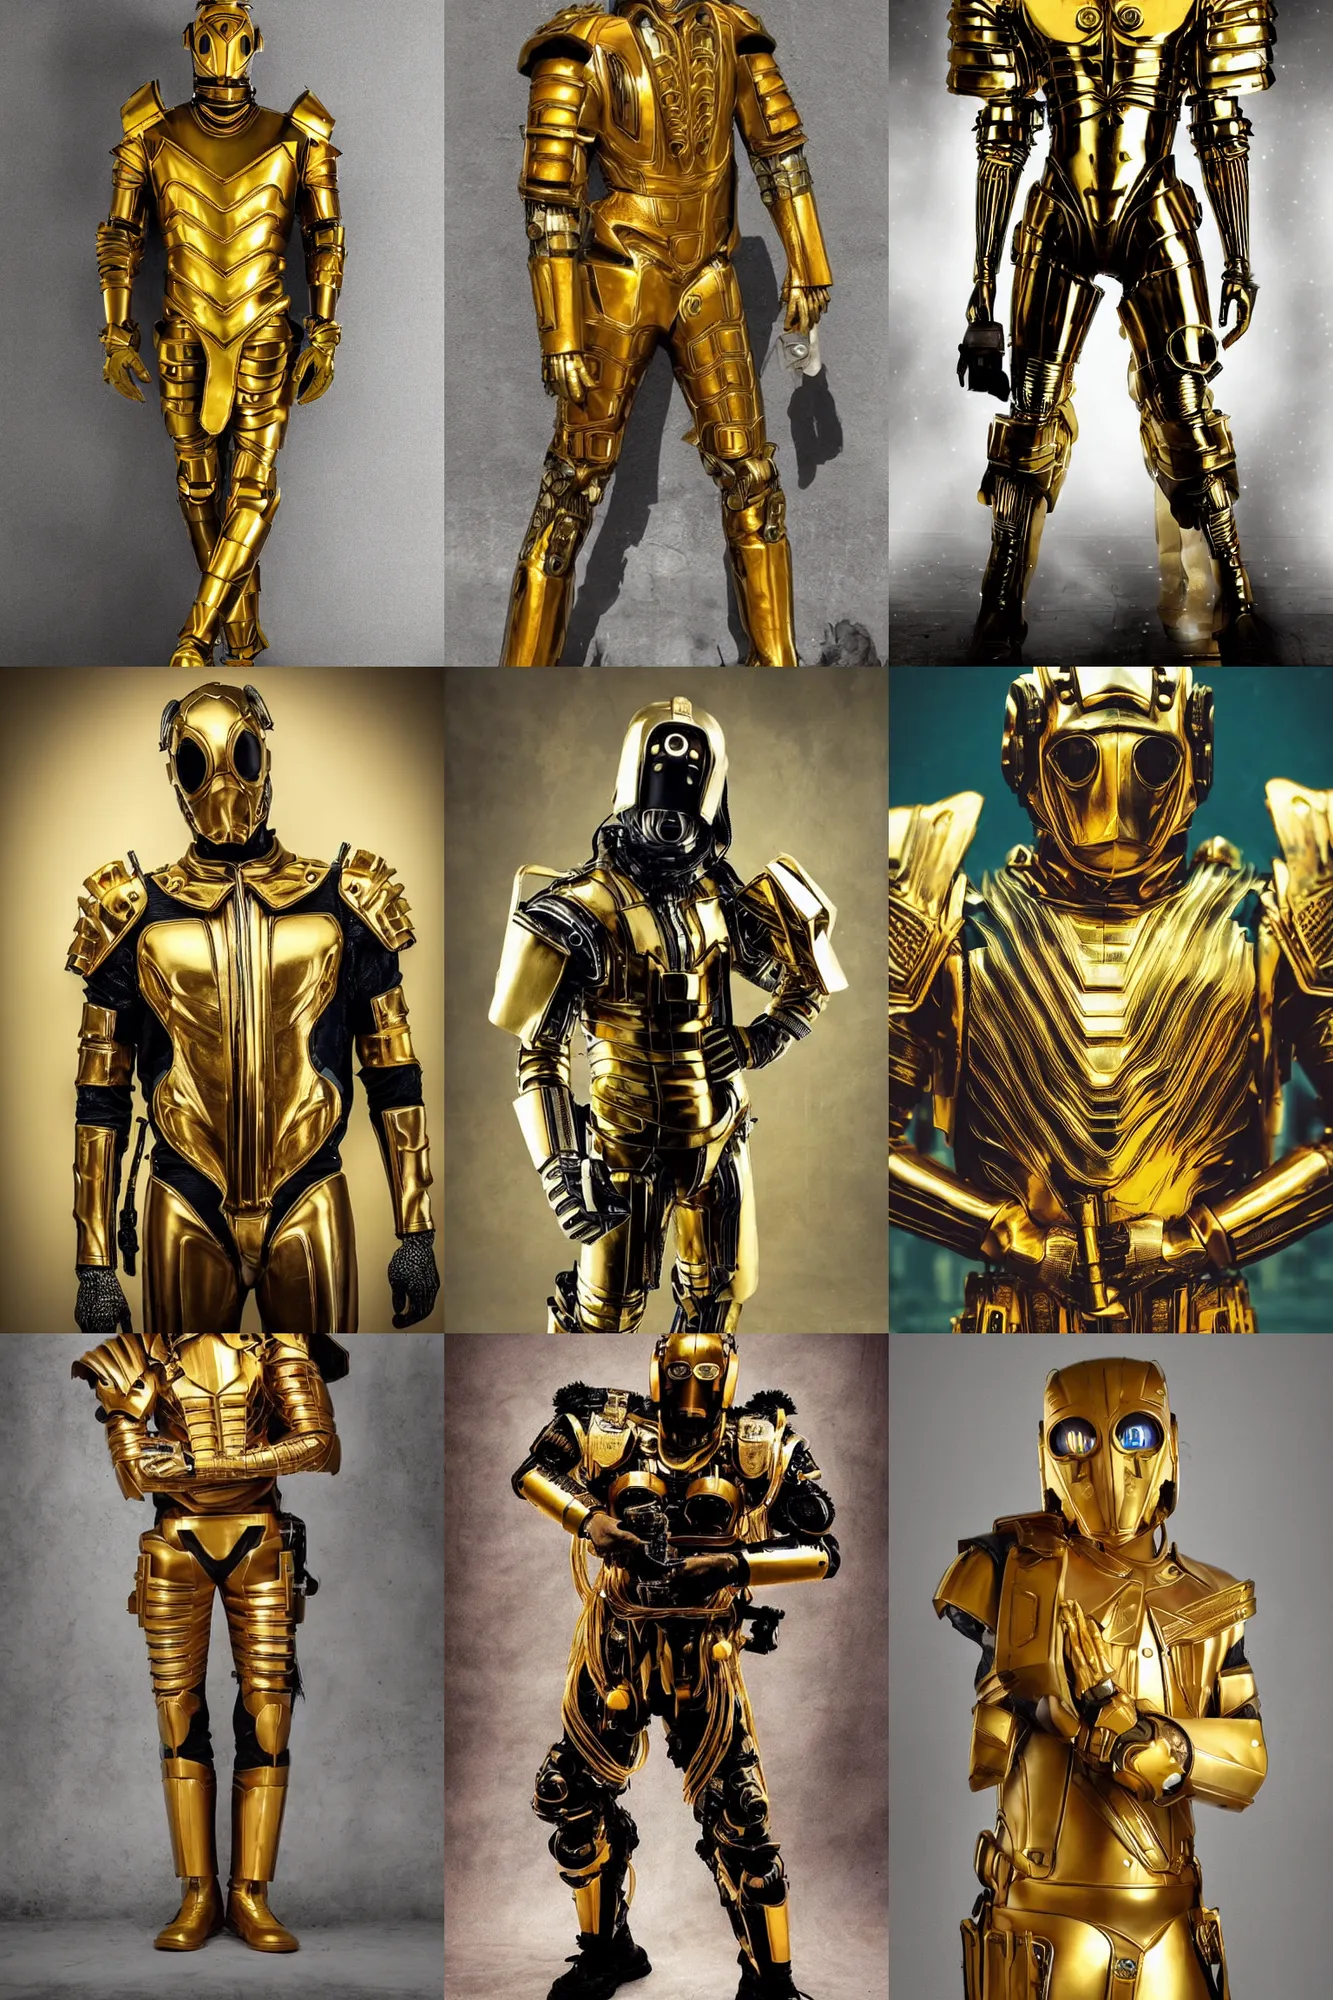 Prompt: beautiful photo of a golden armor Art Deco cyberpunk man